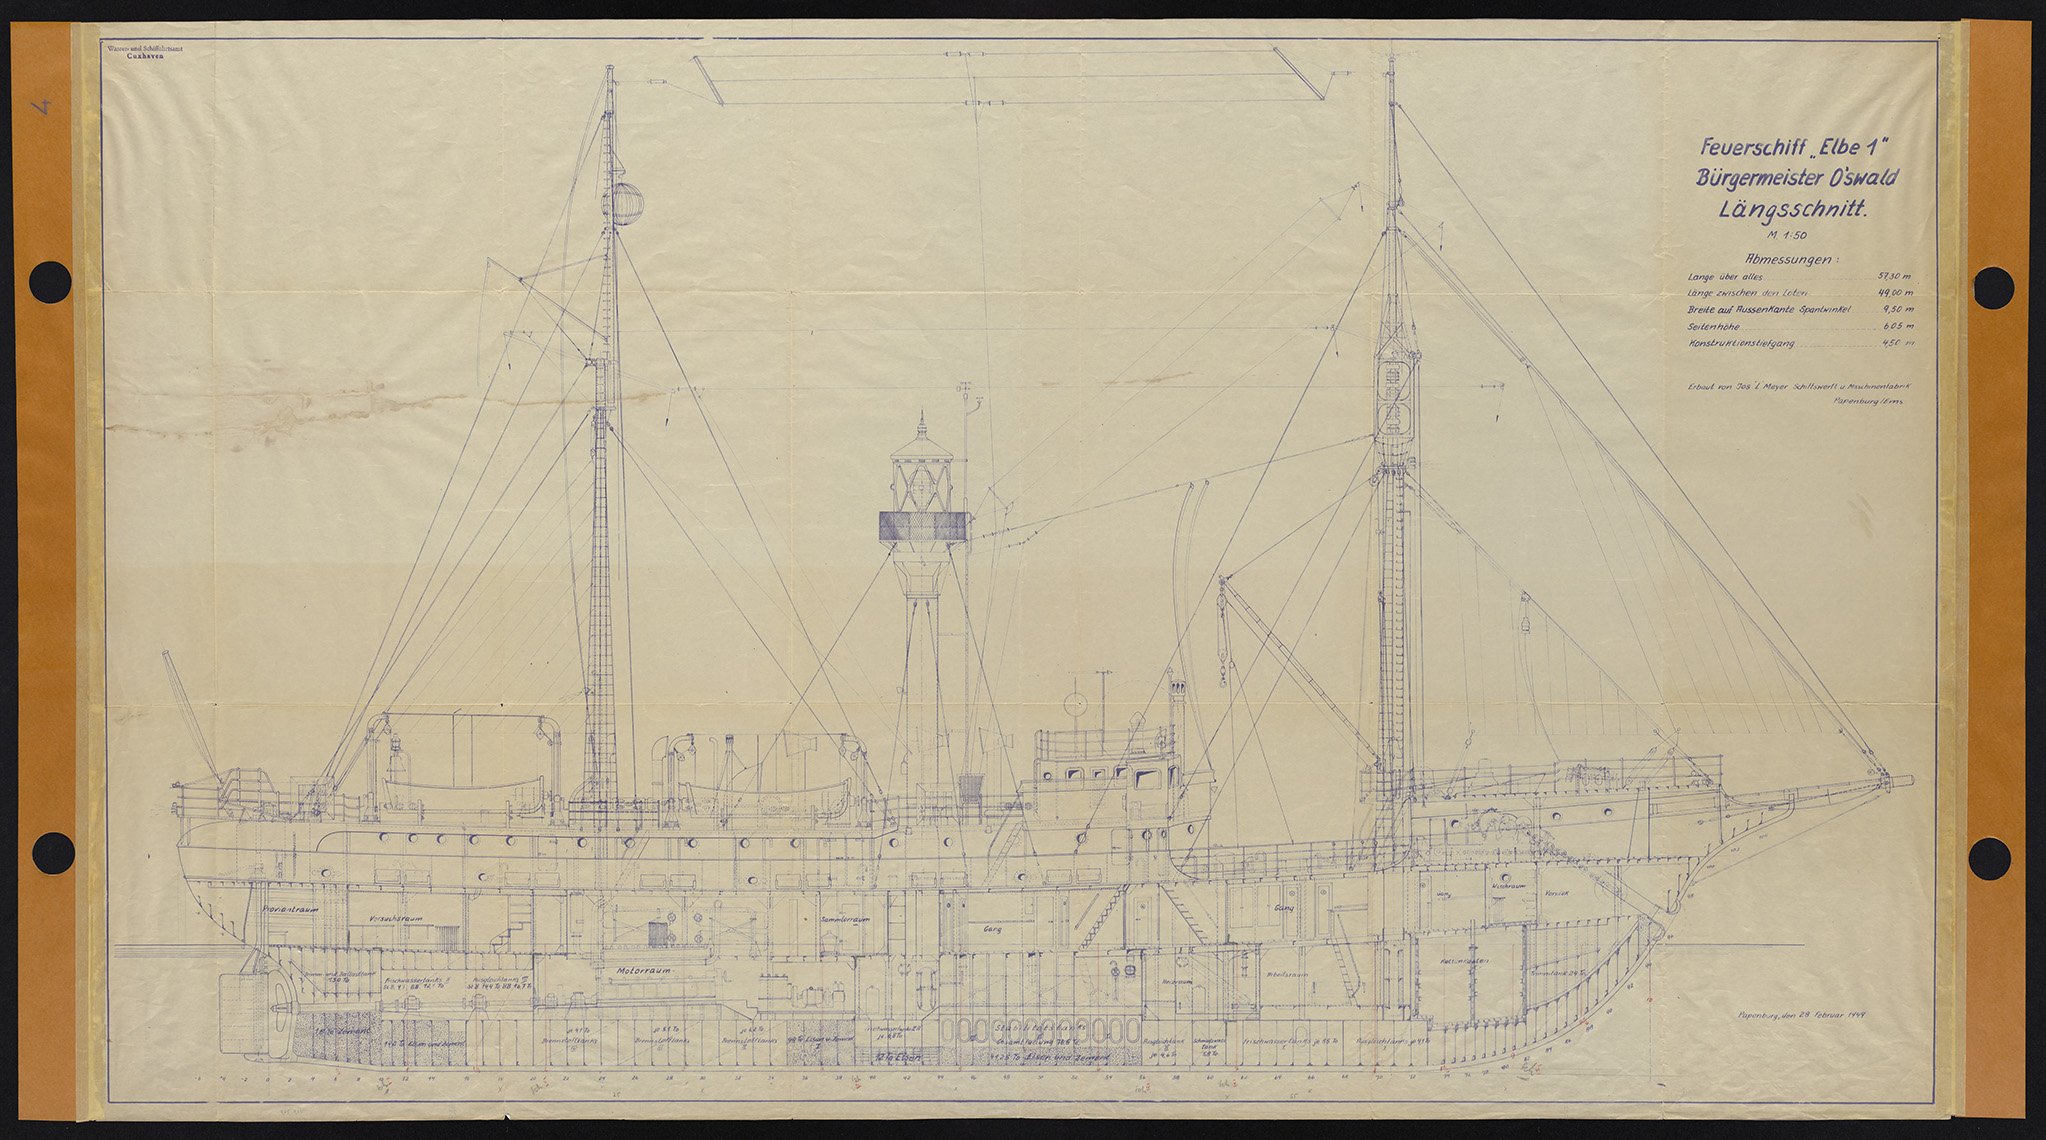 Feuerschiff Bürgermeister O'Swald II (ELBE I) - "Längsschnitt" - 28.02.1949 (Schiffahrtsmuseum Unterweser CC BY-NC-SA)